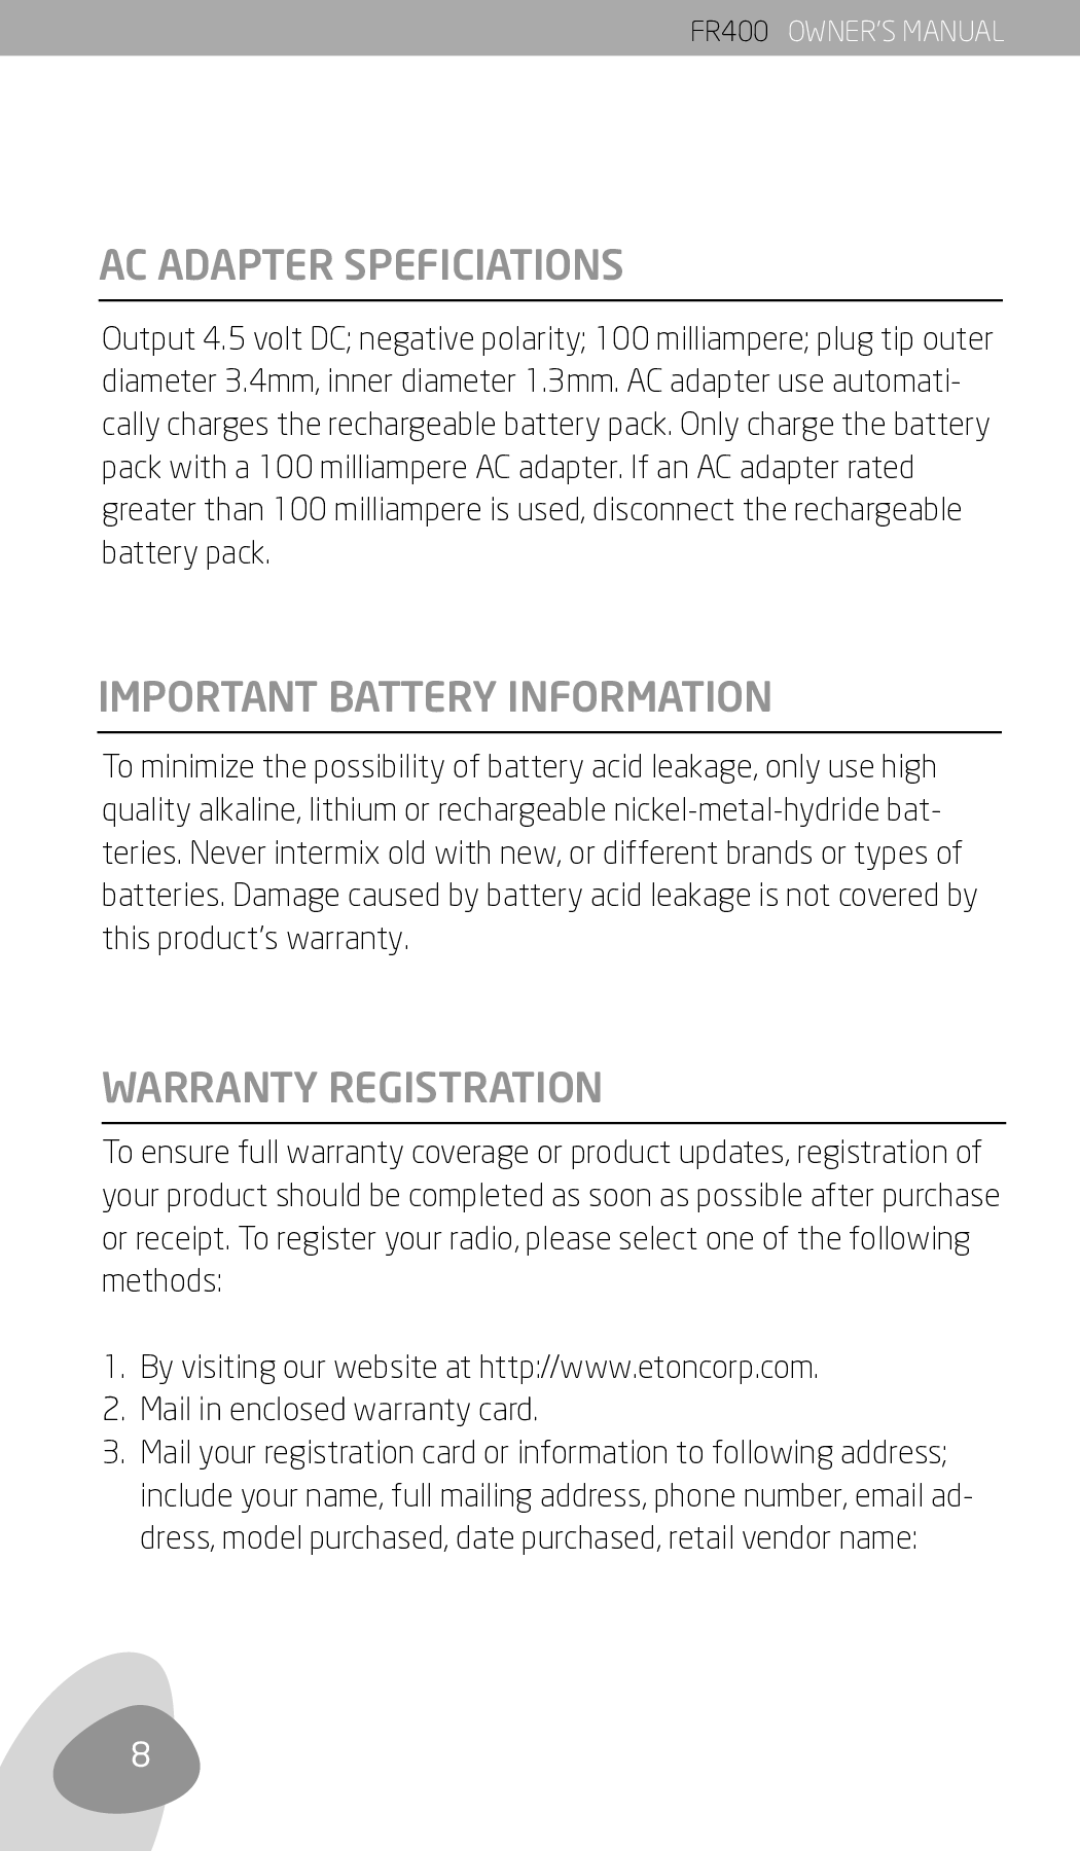 Eton FR400 owner manual AC Adapter Speficiations, Important Battery Information, Warranty Registration 